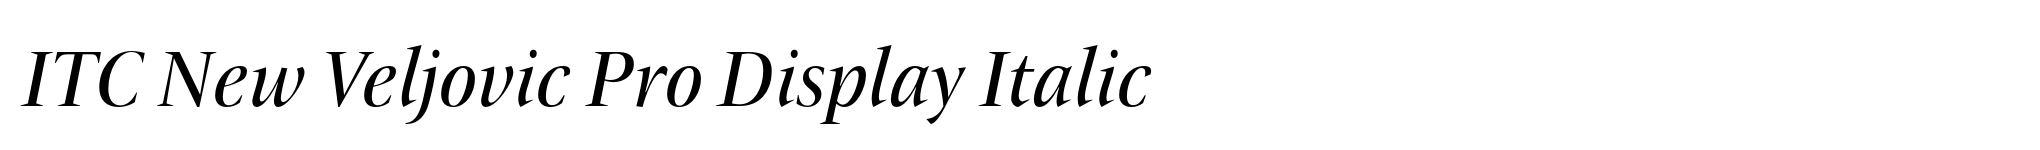 ITC New Veljovic Pro Display Italic image